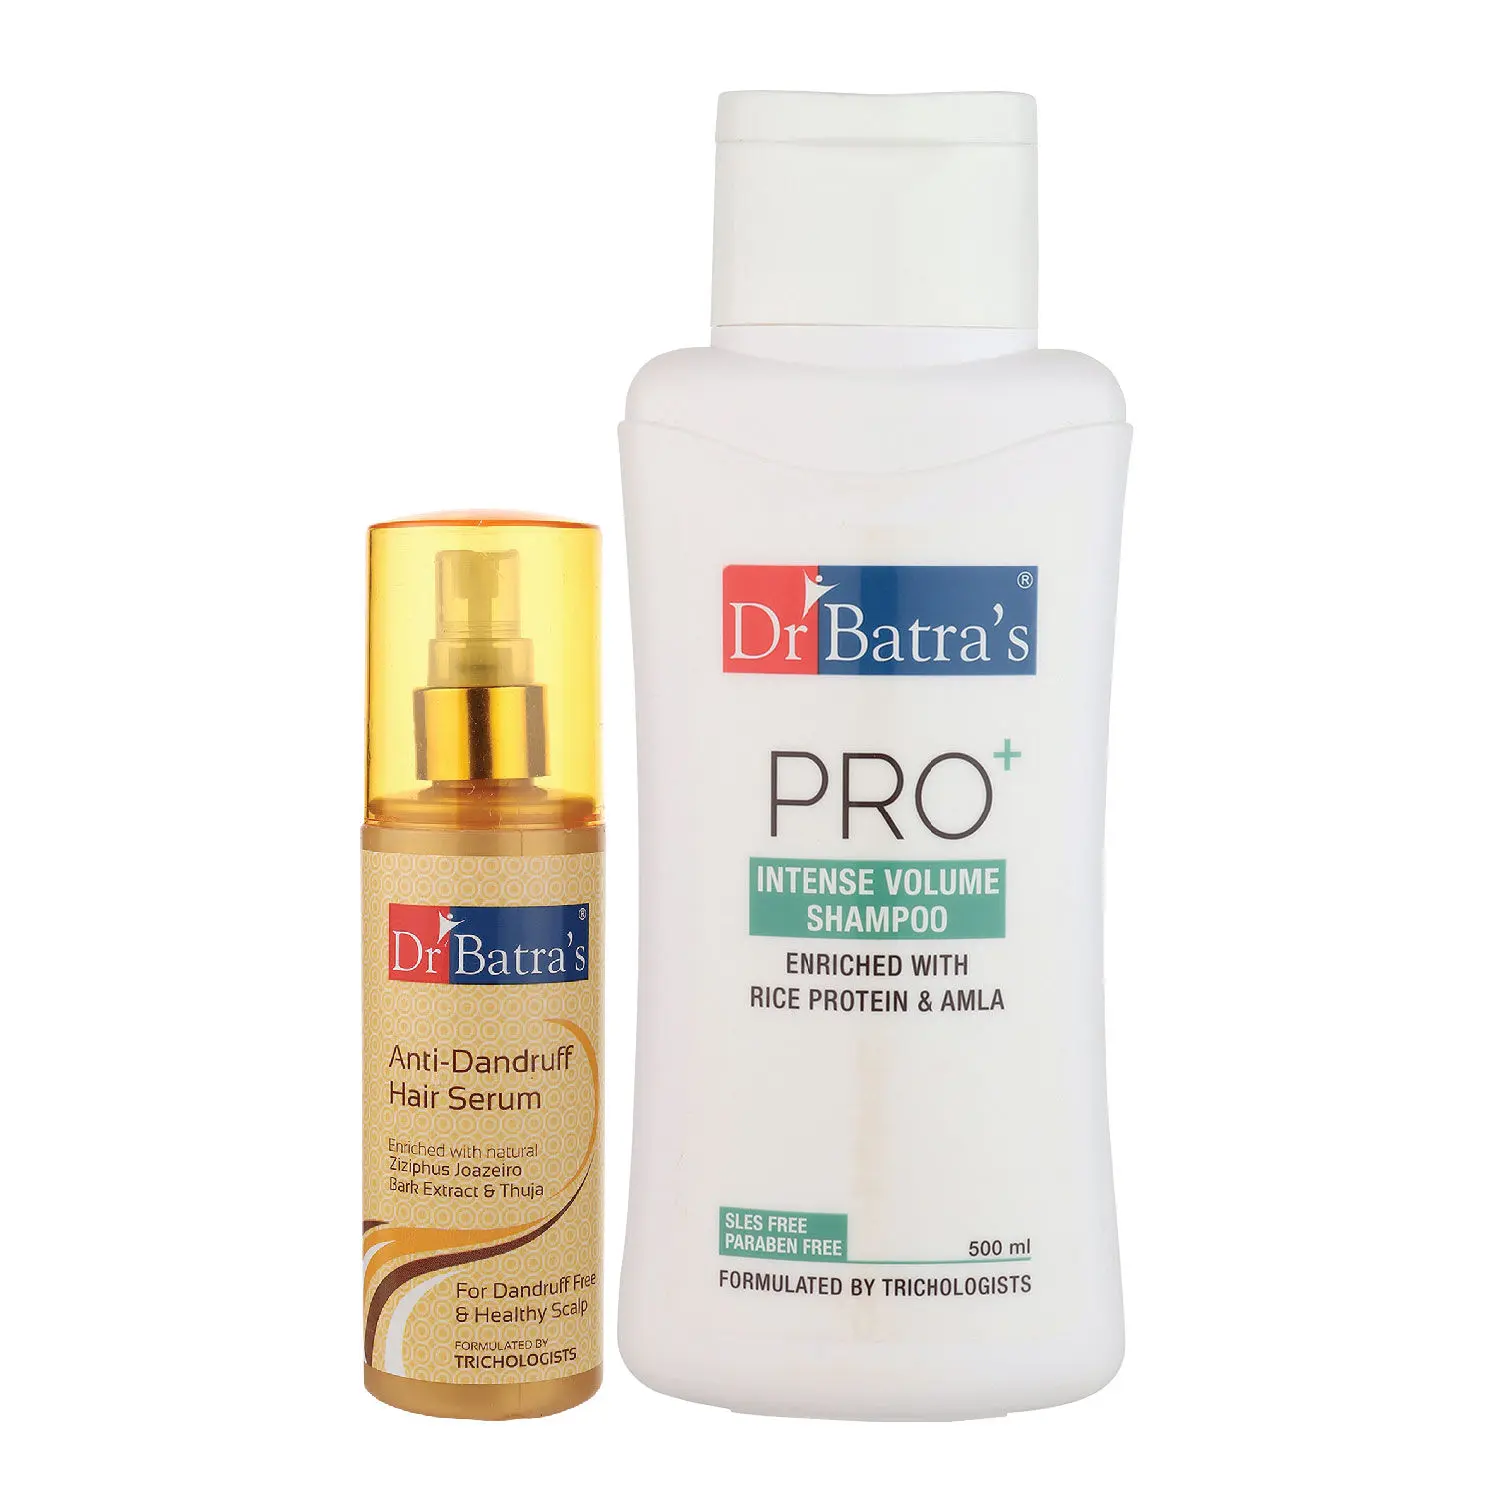 Dr Batra's Anti Dandruff Hair Serum and Pro+ Intense Volume Shampoo - 500 ml